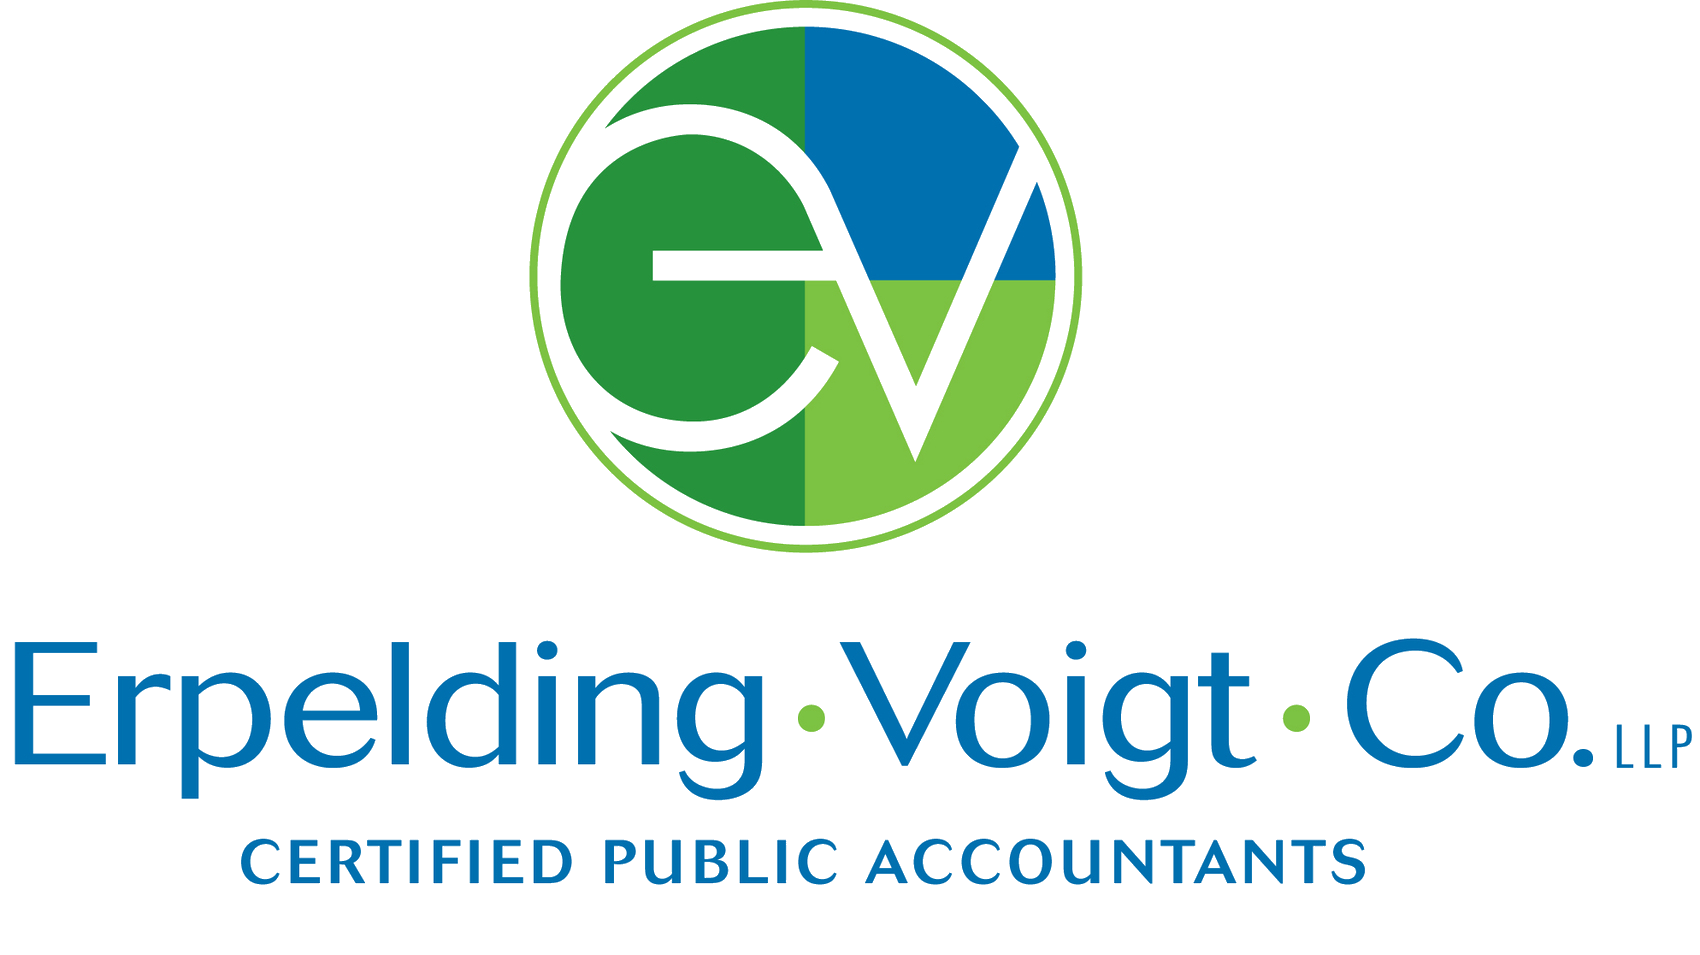 Erpelding, Voigt & Co., LLP logo